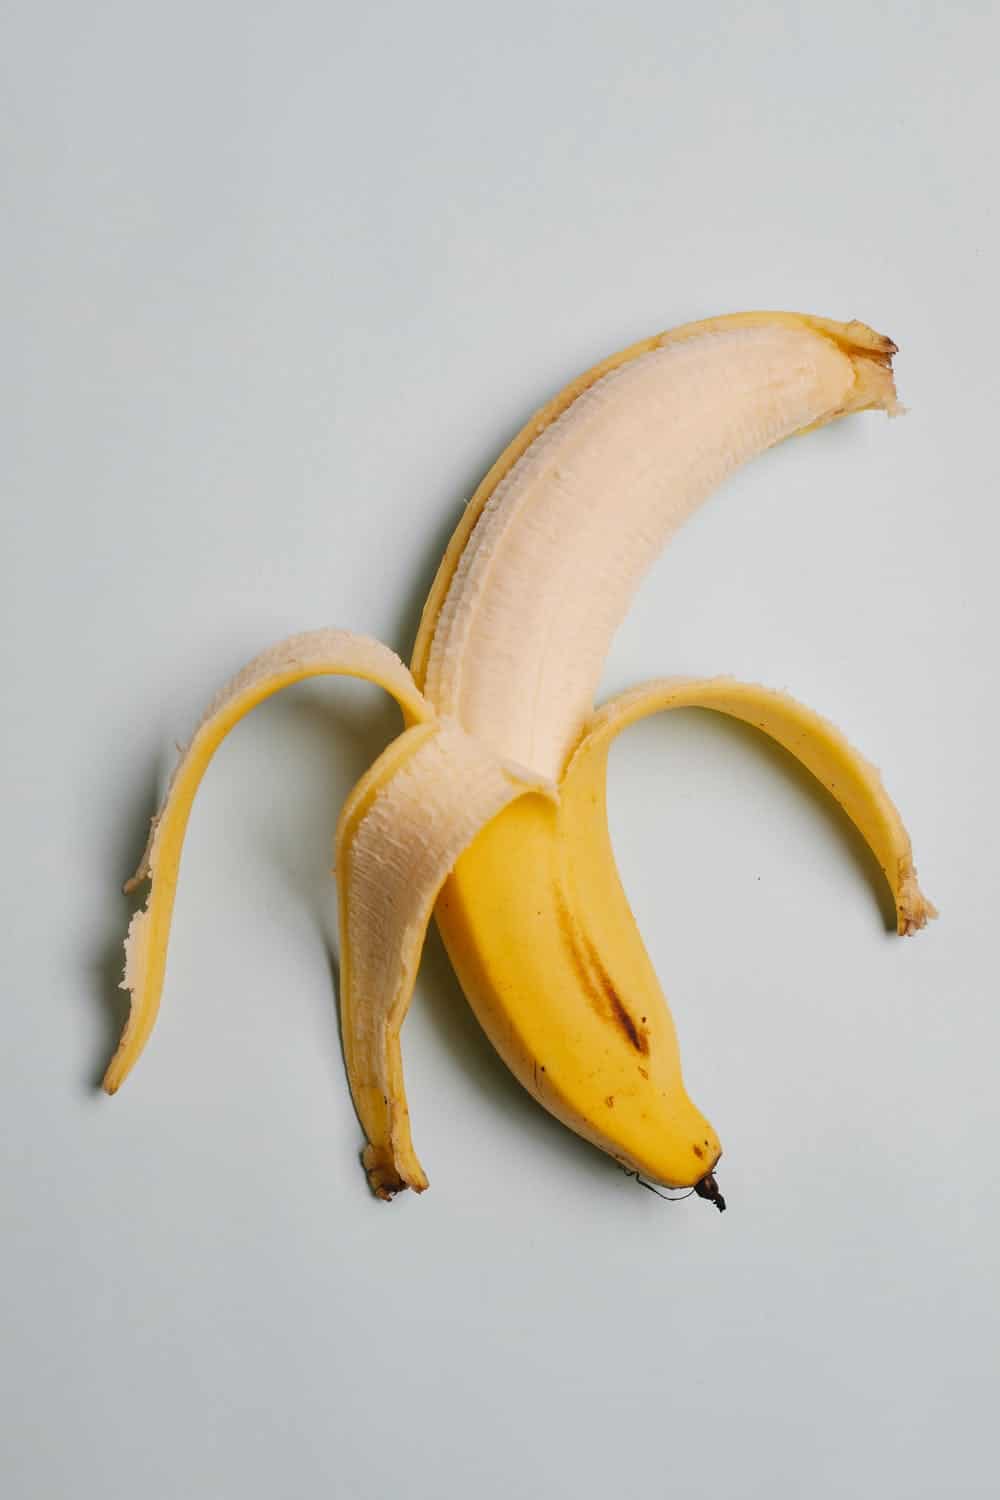 banana substitute